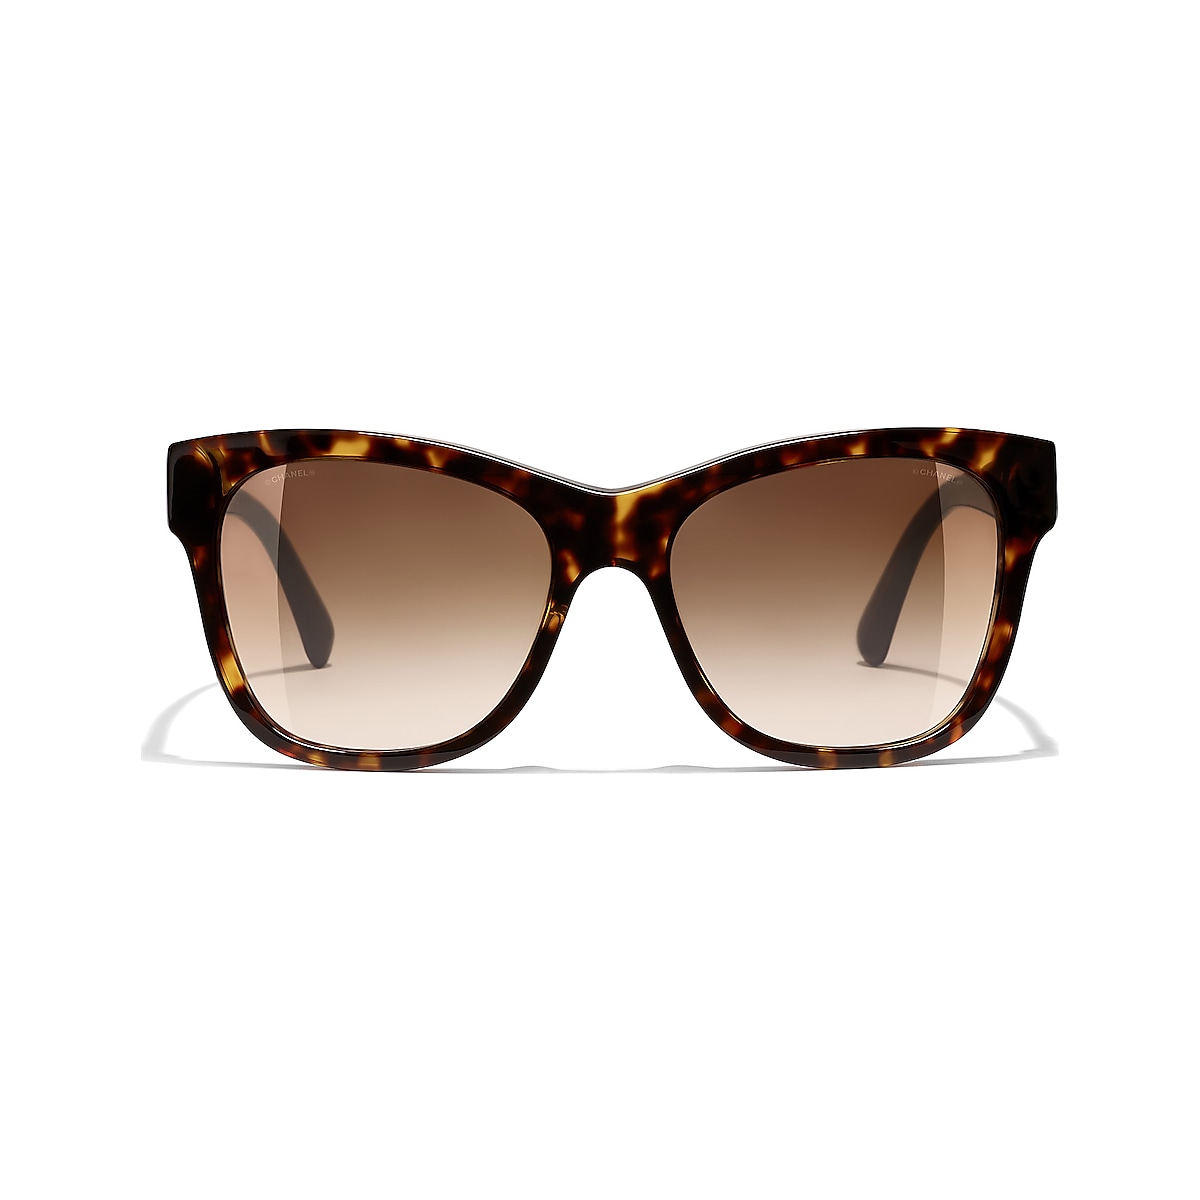 Chanel Square Sunglasses CH5380 56 Brown & Dark Tortoise Sunglasses |  Sunglass Hut Australia